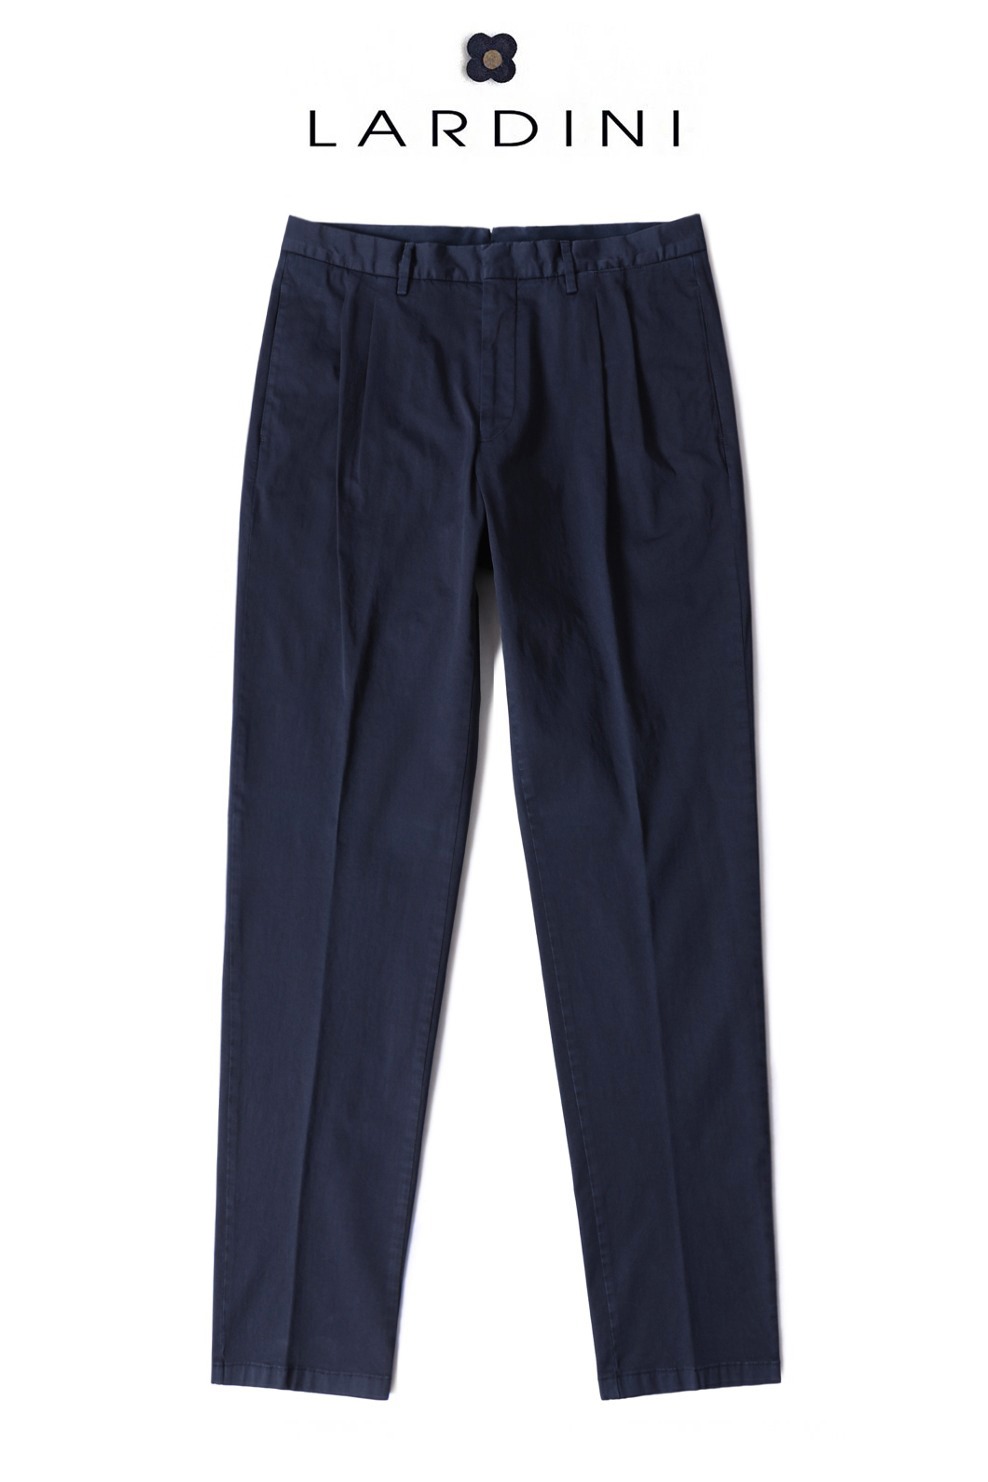 LARDINI Signature Two Tuck Tailored Cotton Pants-Navy